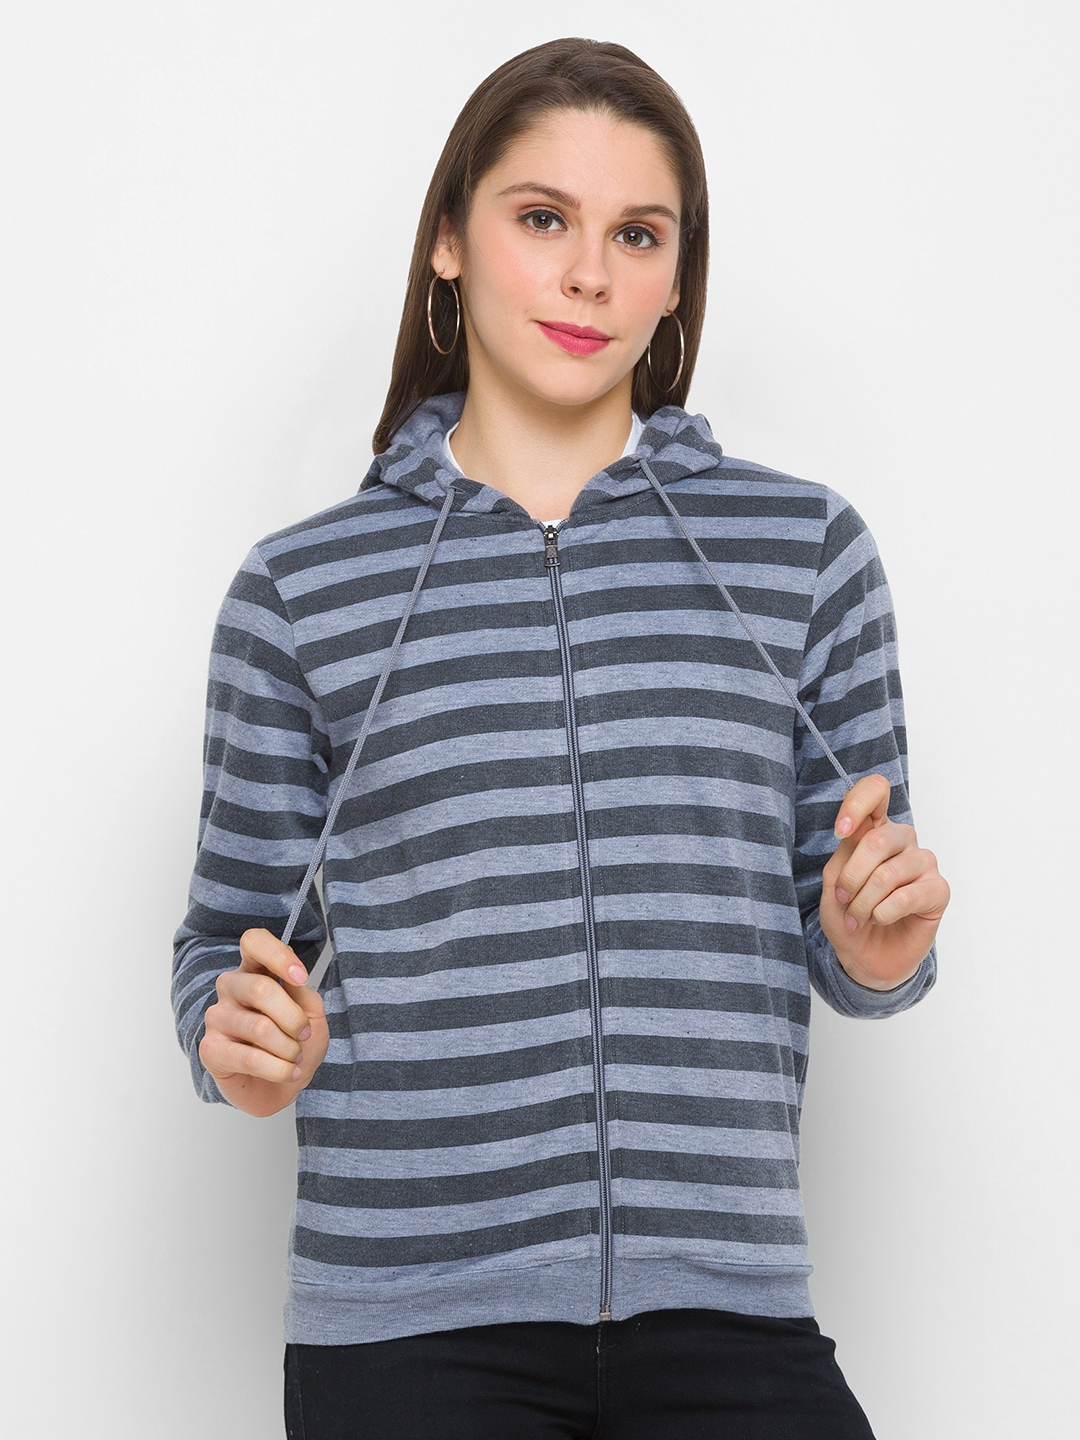 Globus Striped Grey Sweatshirt